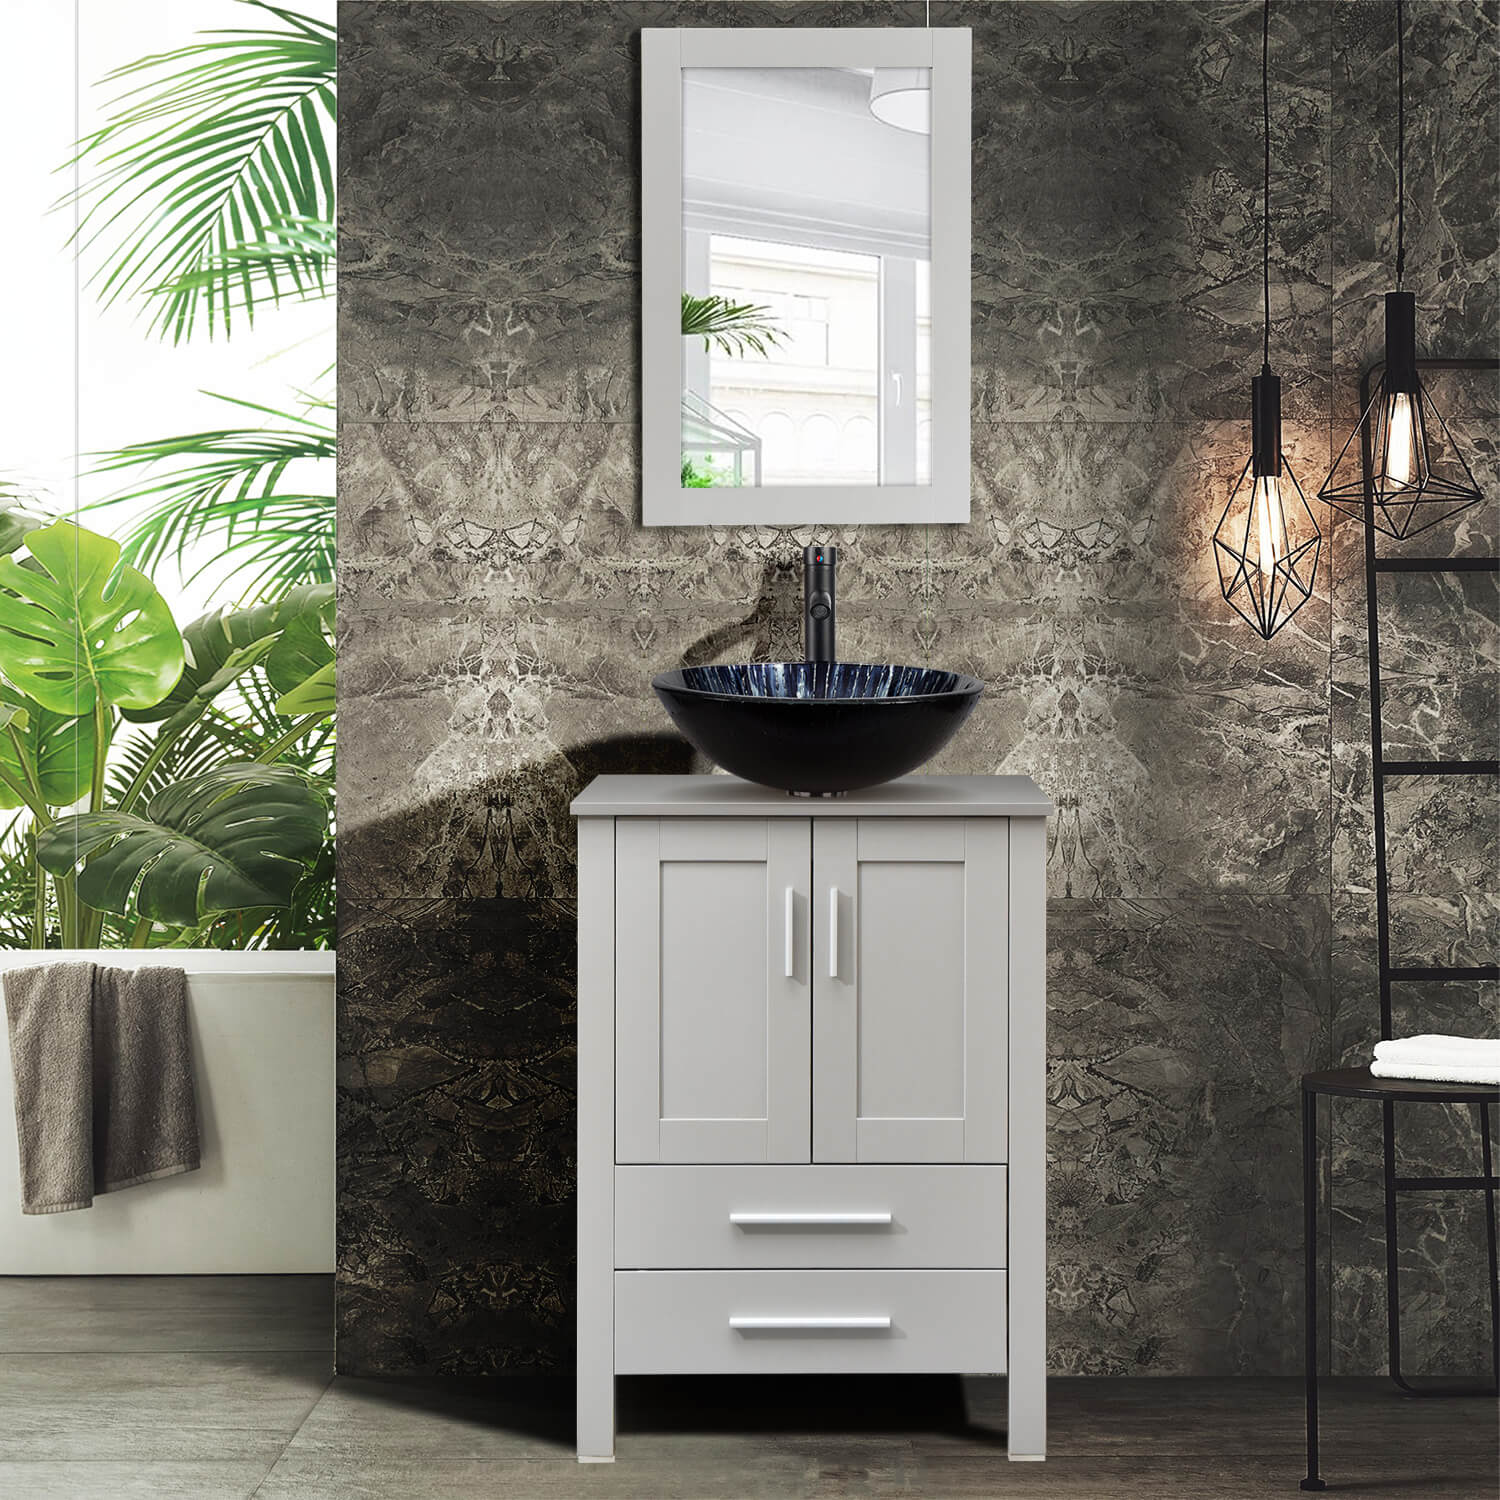 Elecwish gray wood bathroom vanity with patterened round sink in modern bathroom